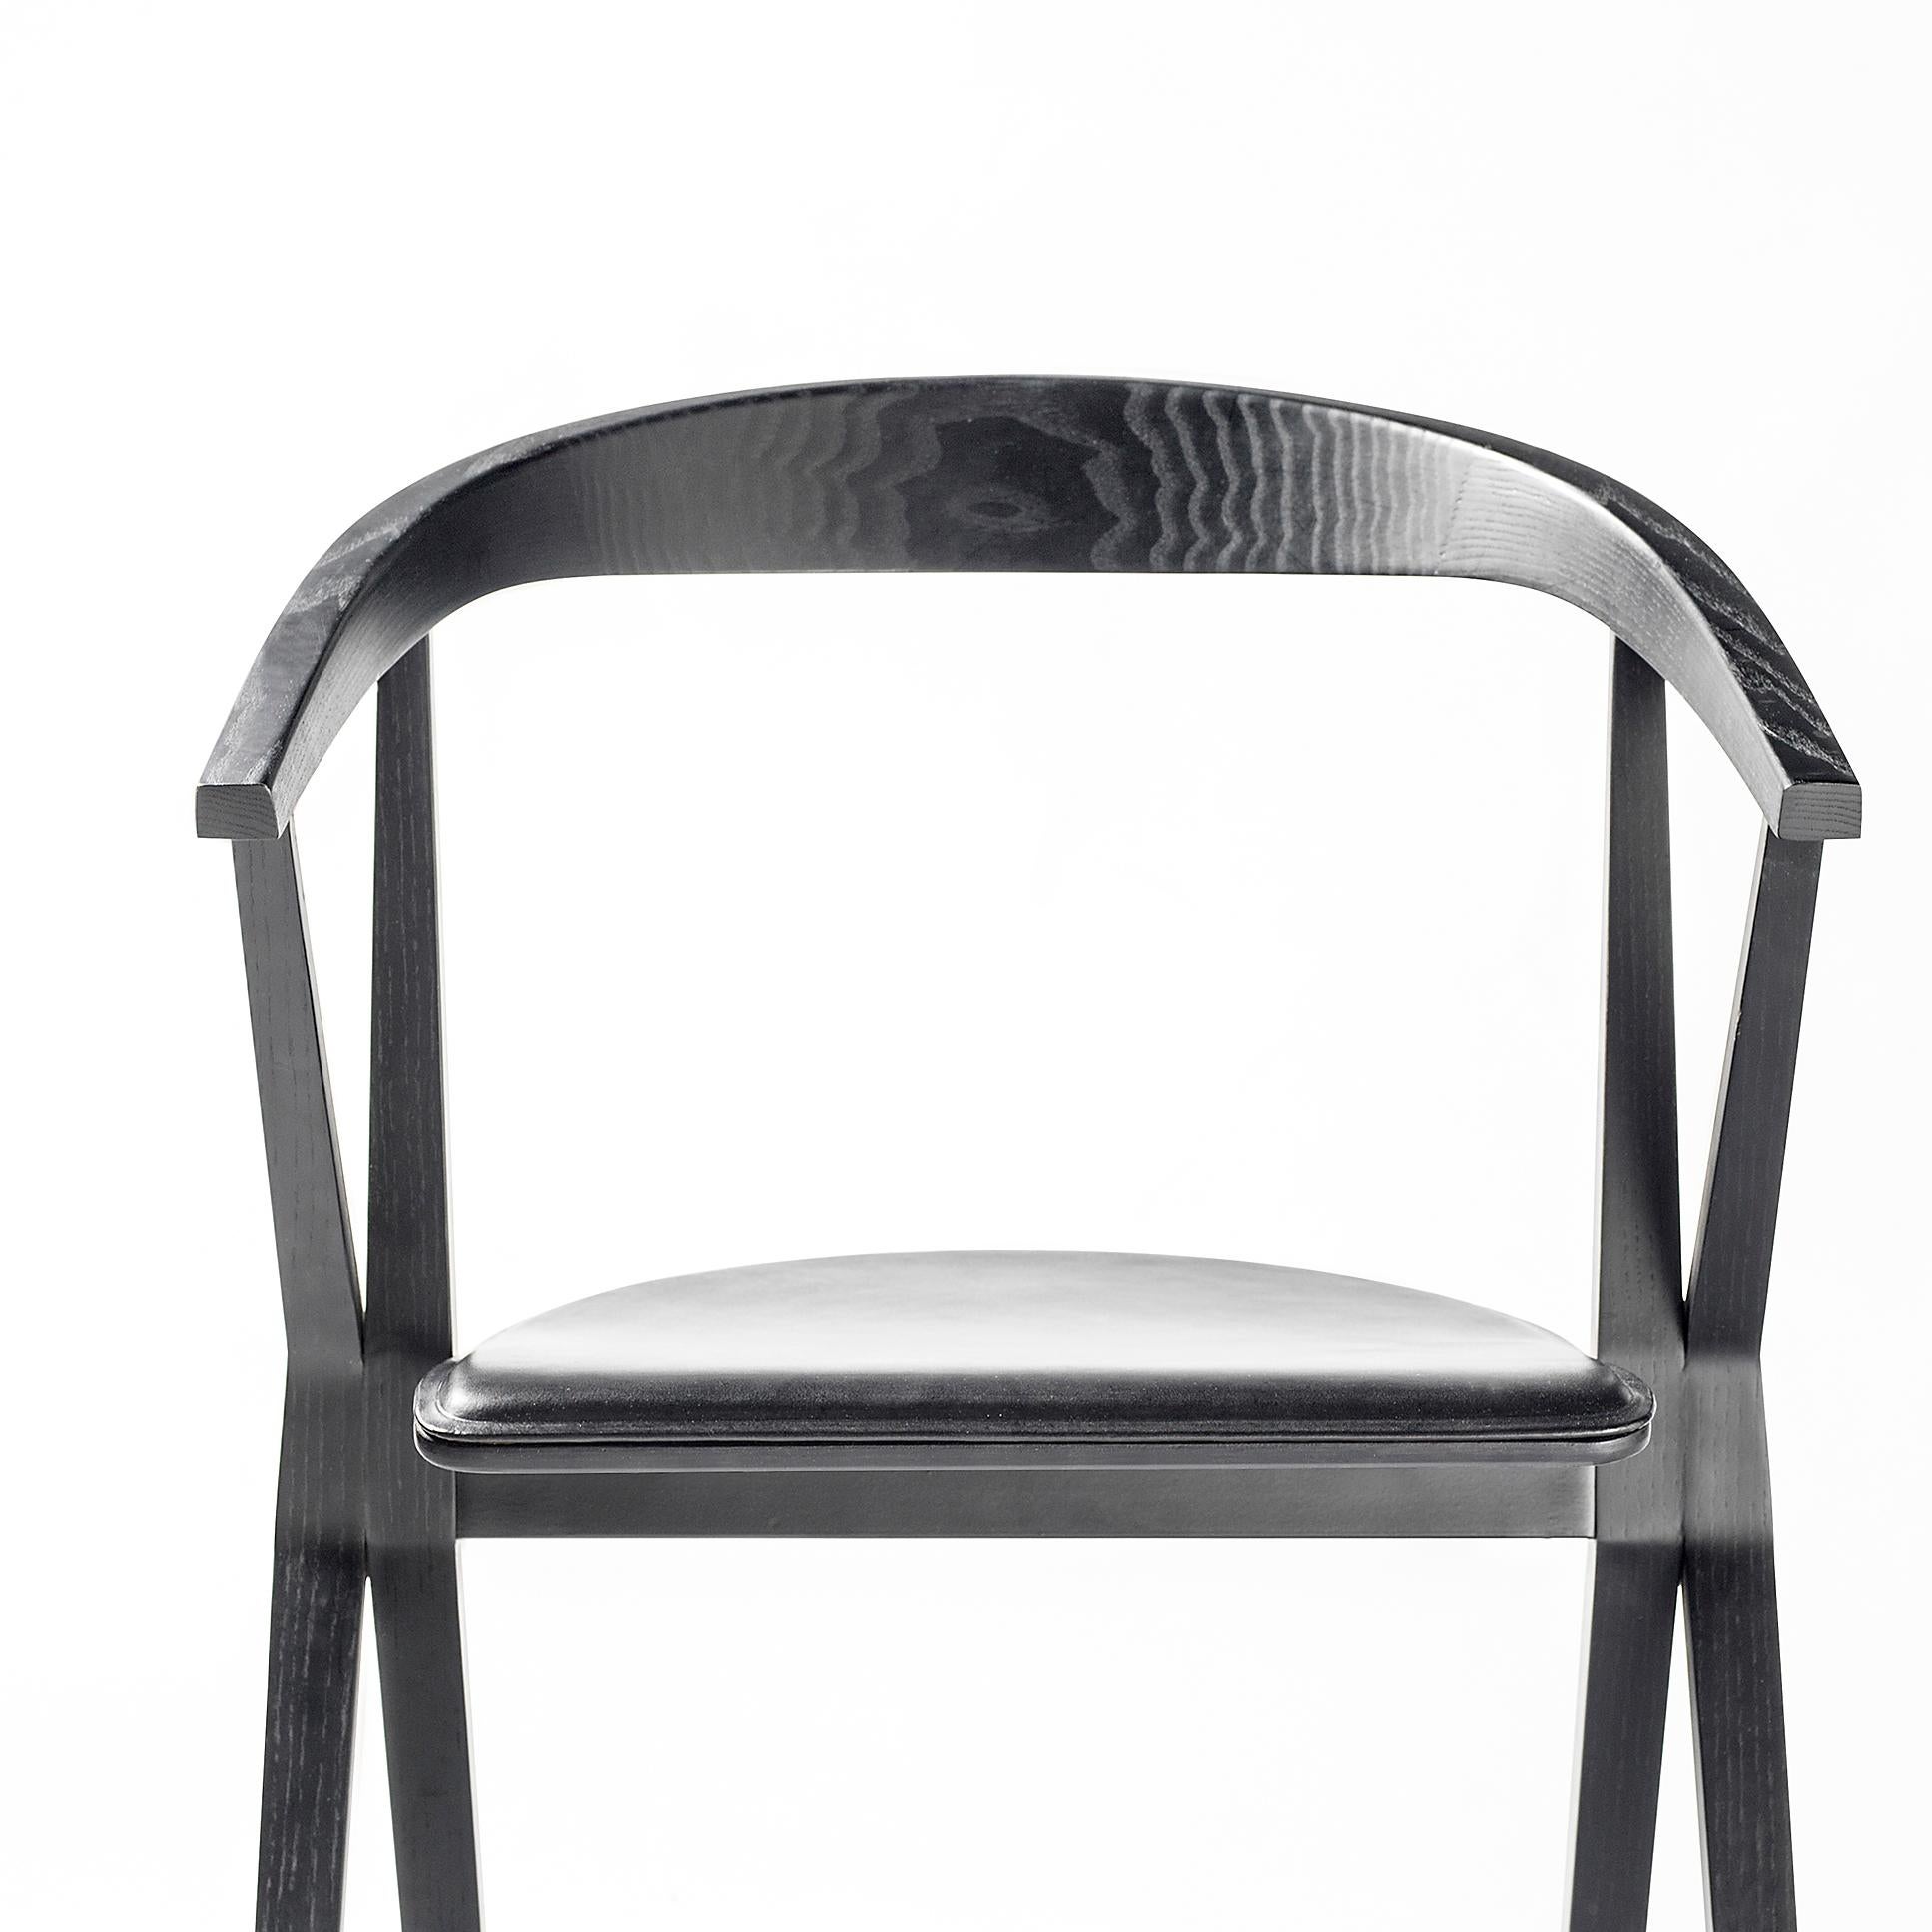 Spanish Konstantin Grcic B Chair Black Leather for Bd Barcelona